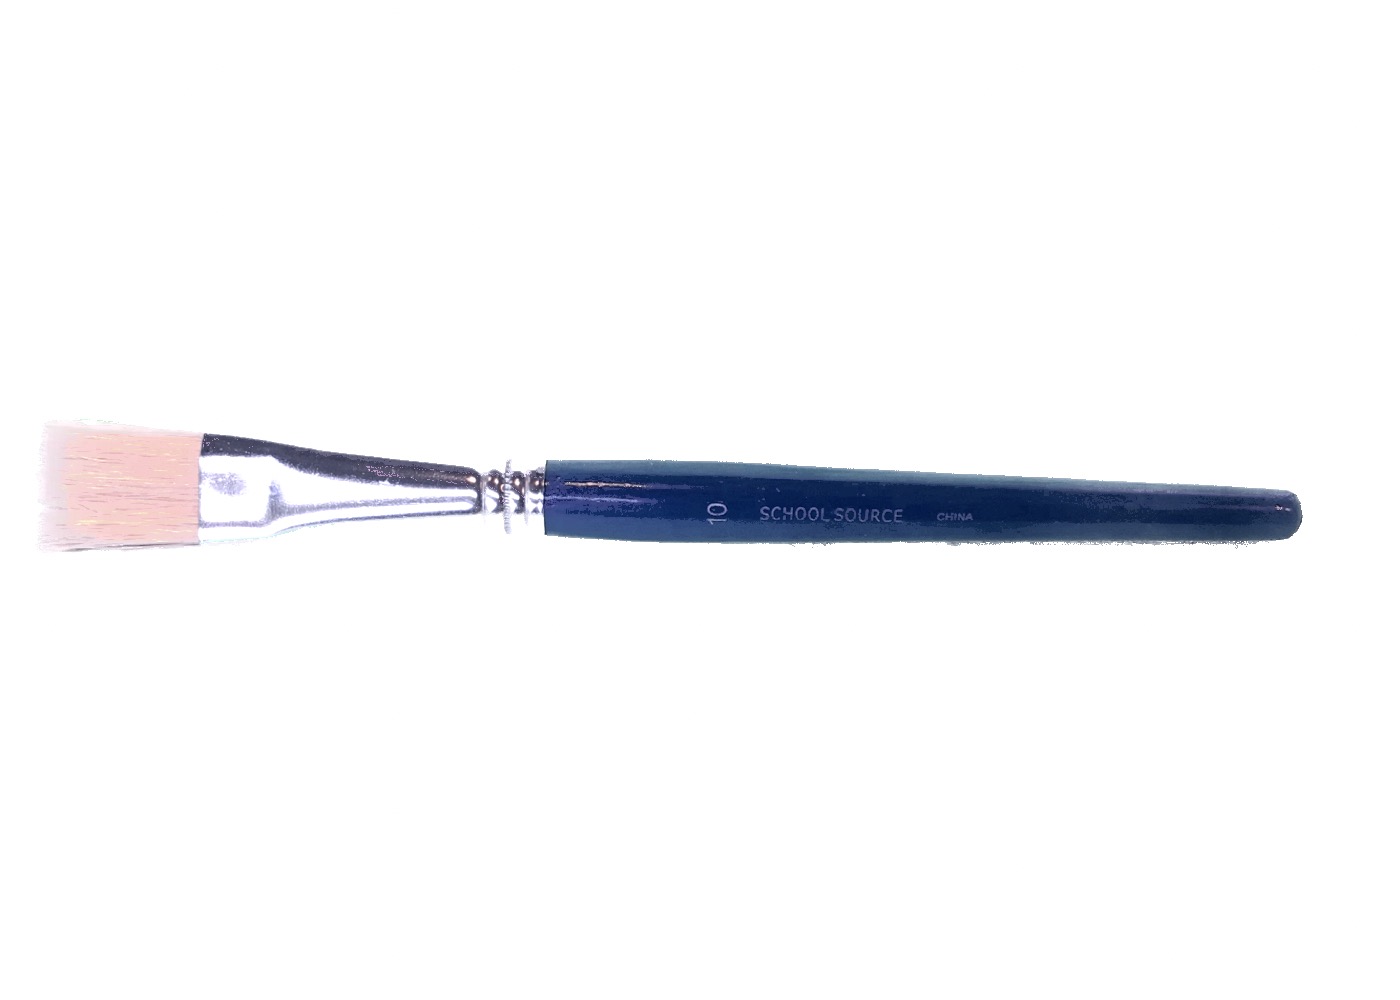 Short Blue Handled Bristle Flat Brush #10 - Each